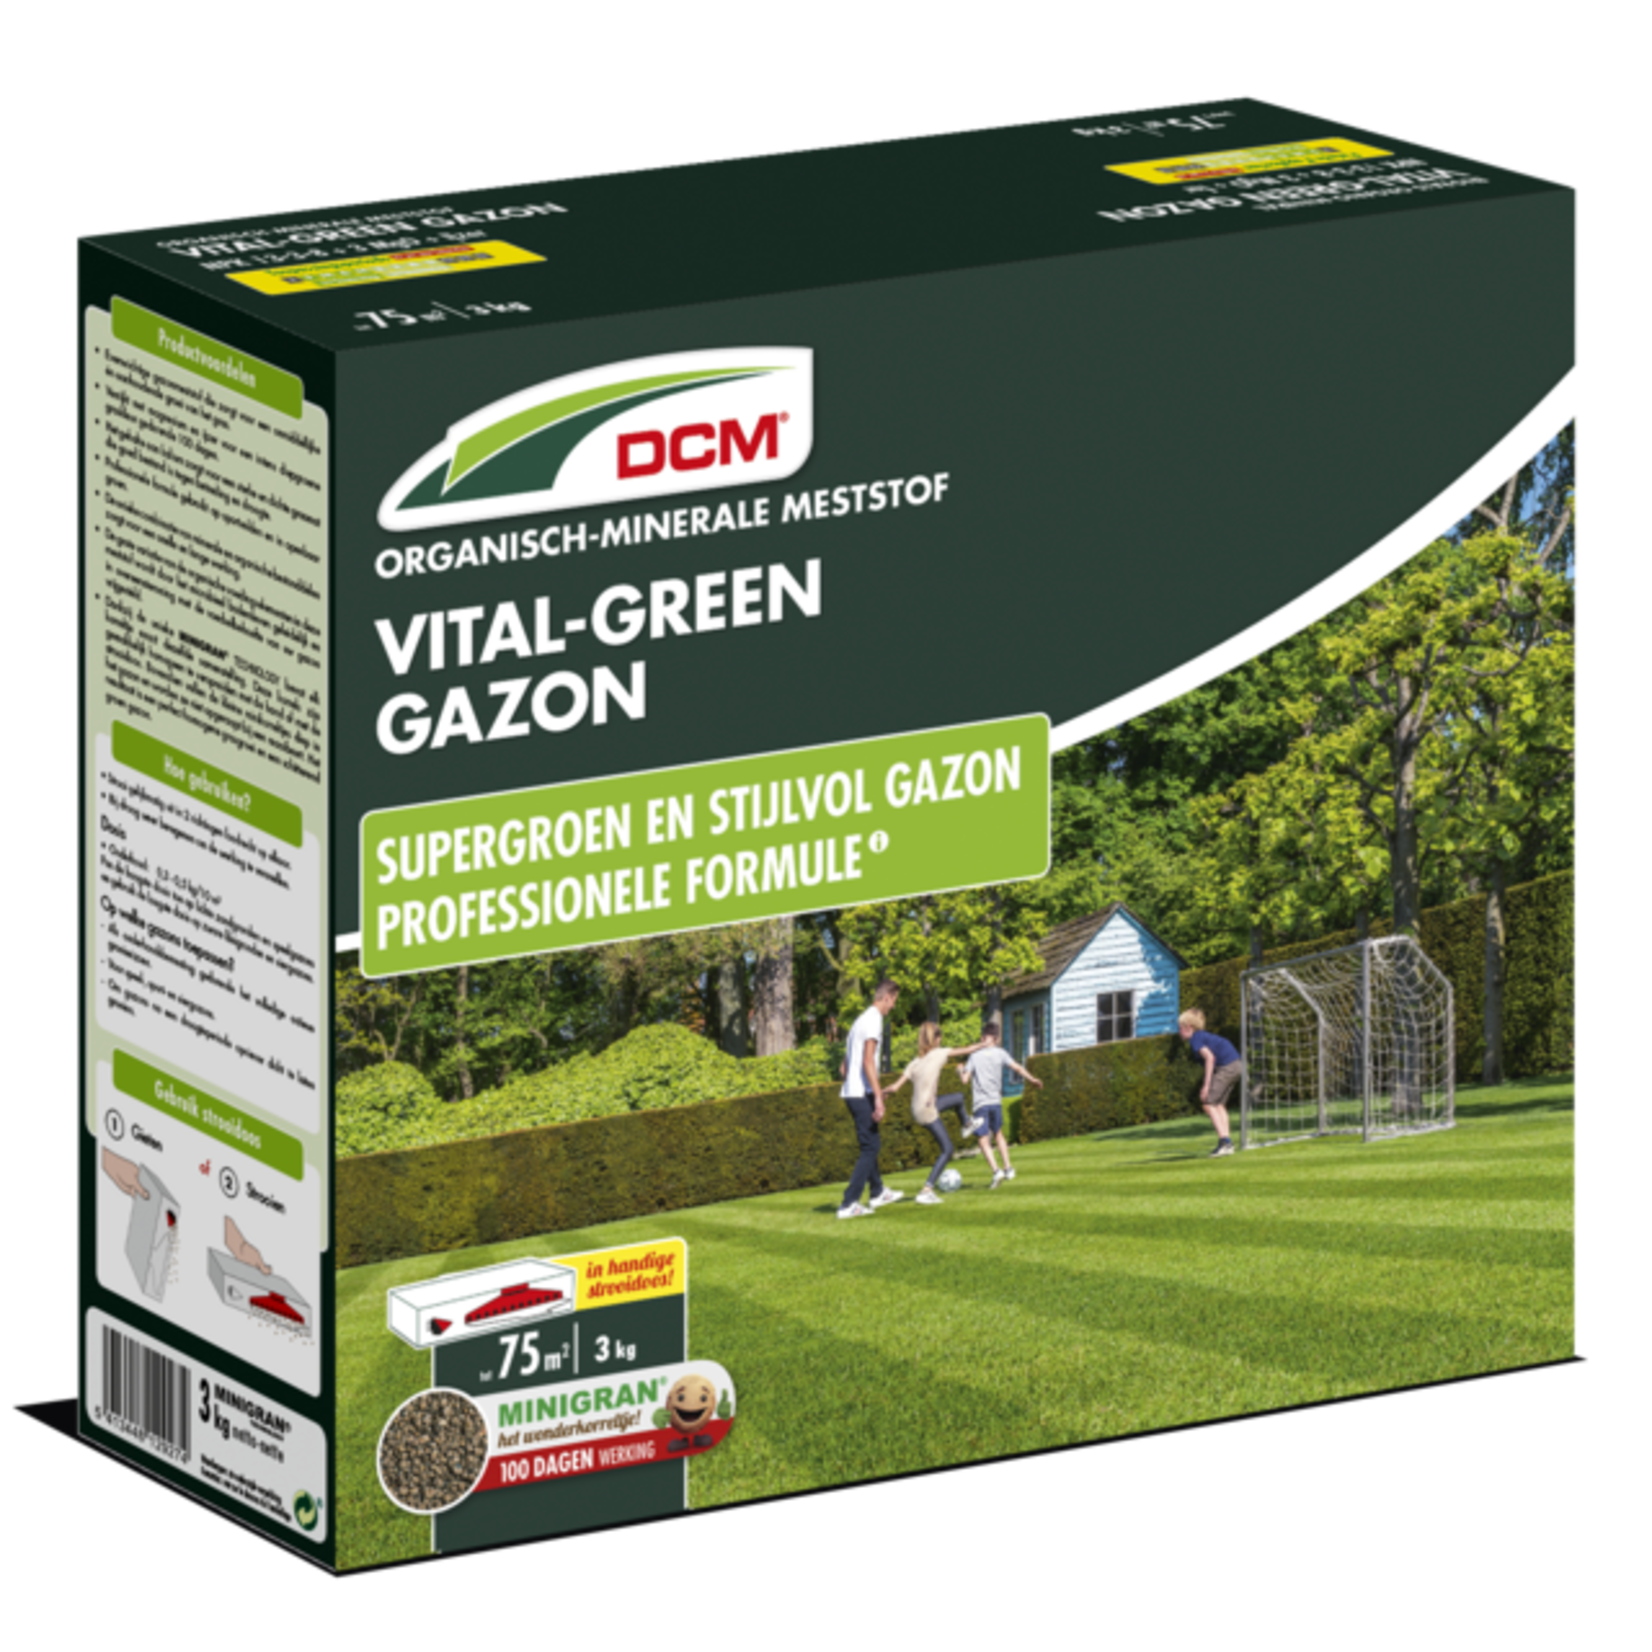 DCM Vital-Green gazon